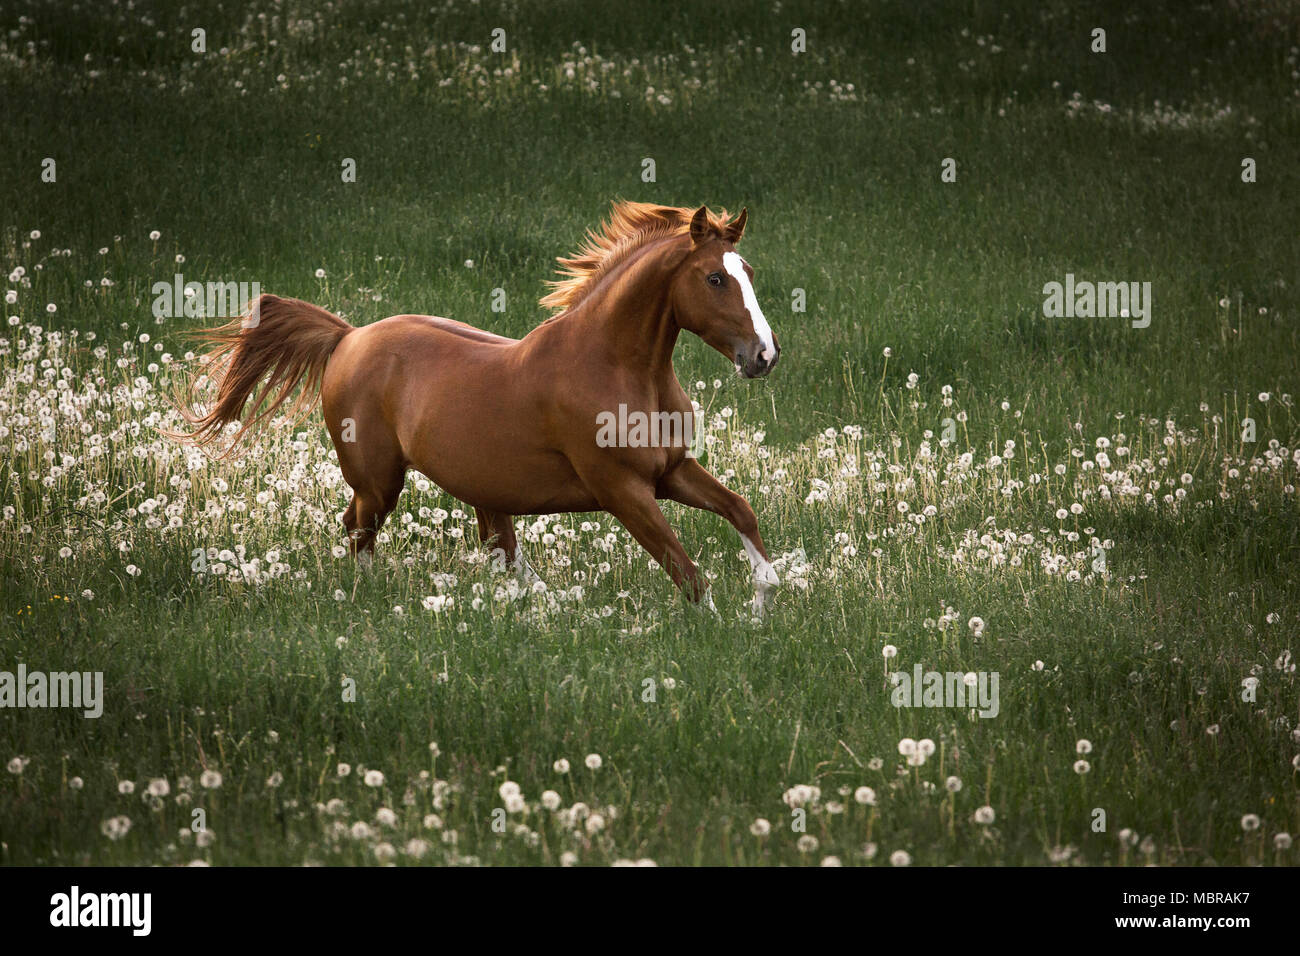 Fox, warmblood horse with blaze gallops dynamically across a dandelion meadow, Germany Stock Photo